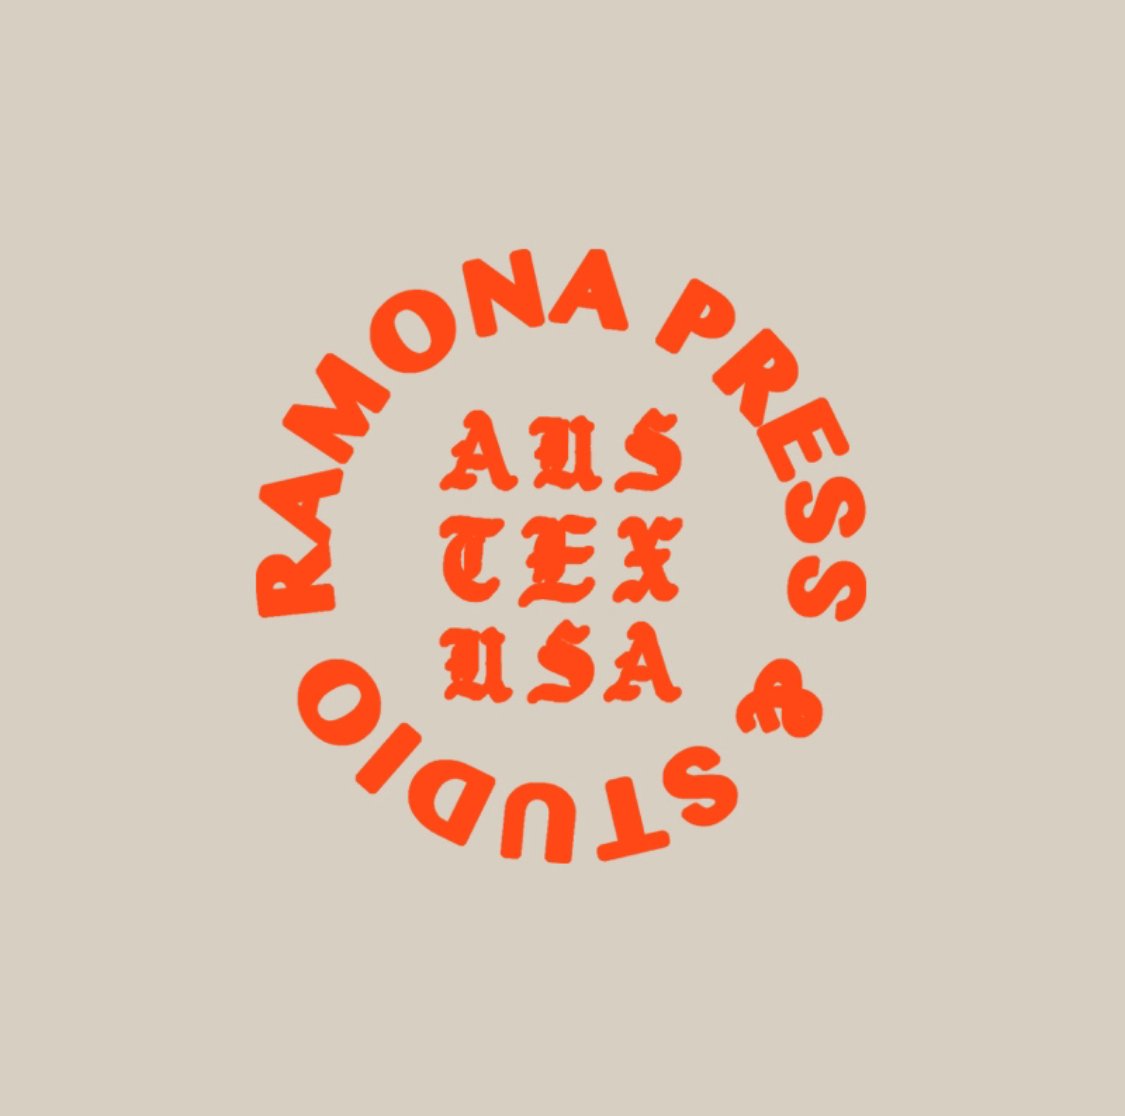 Ramona Press